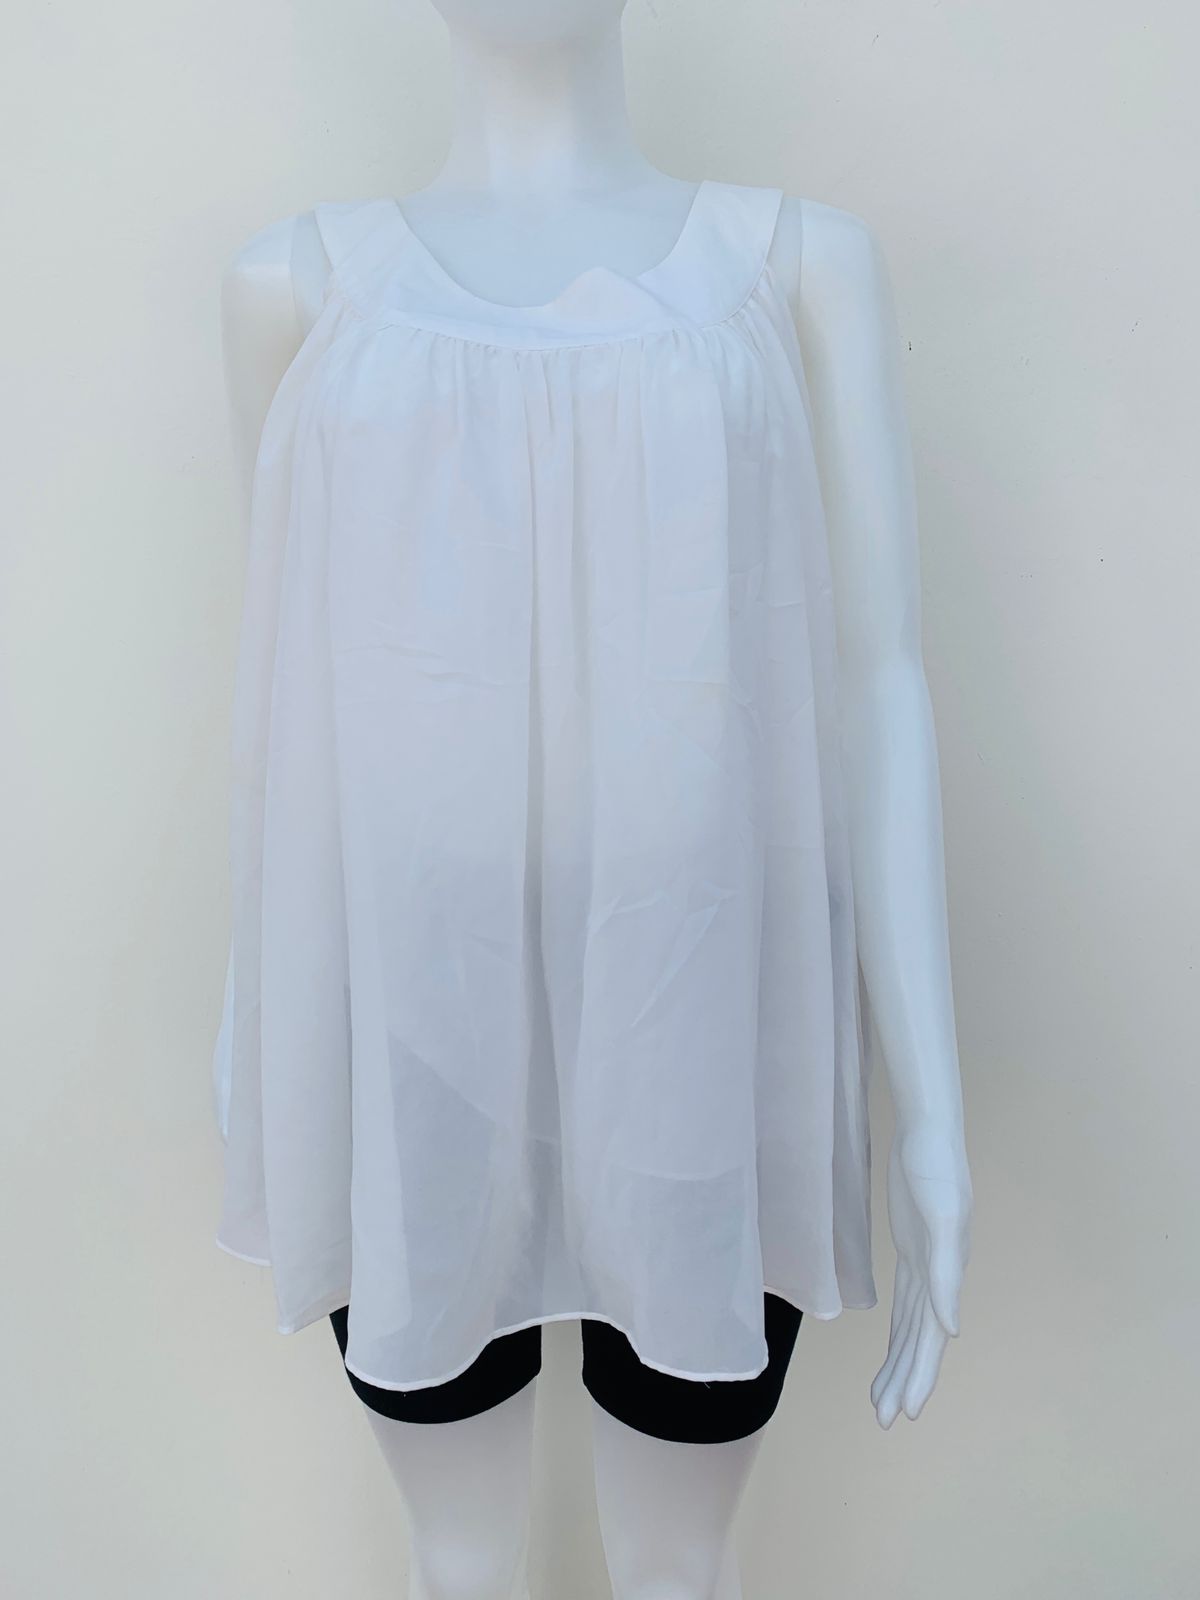 Blusa ESSENTIALS by MILANO original, blanca transparente con vuelo.